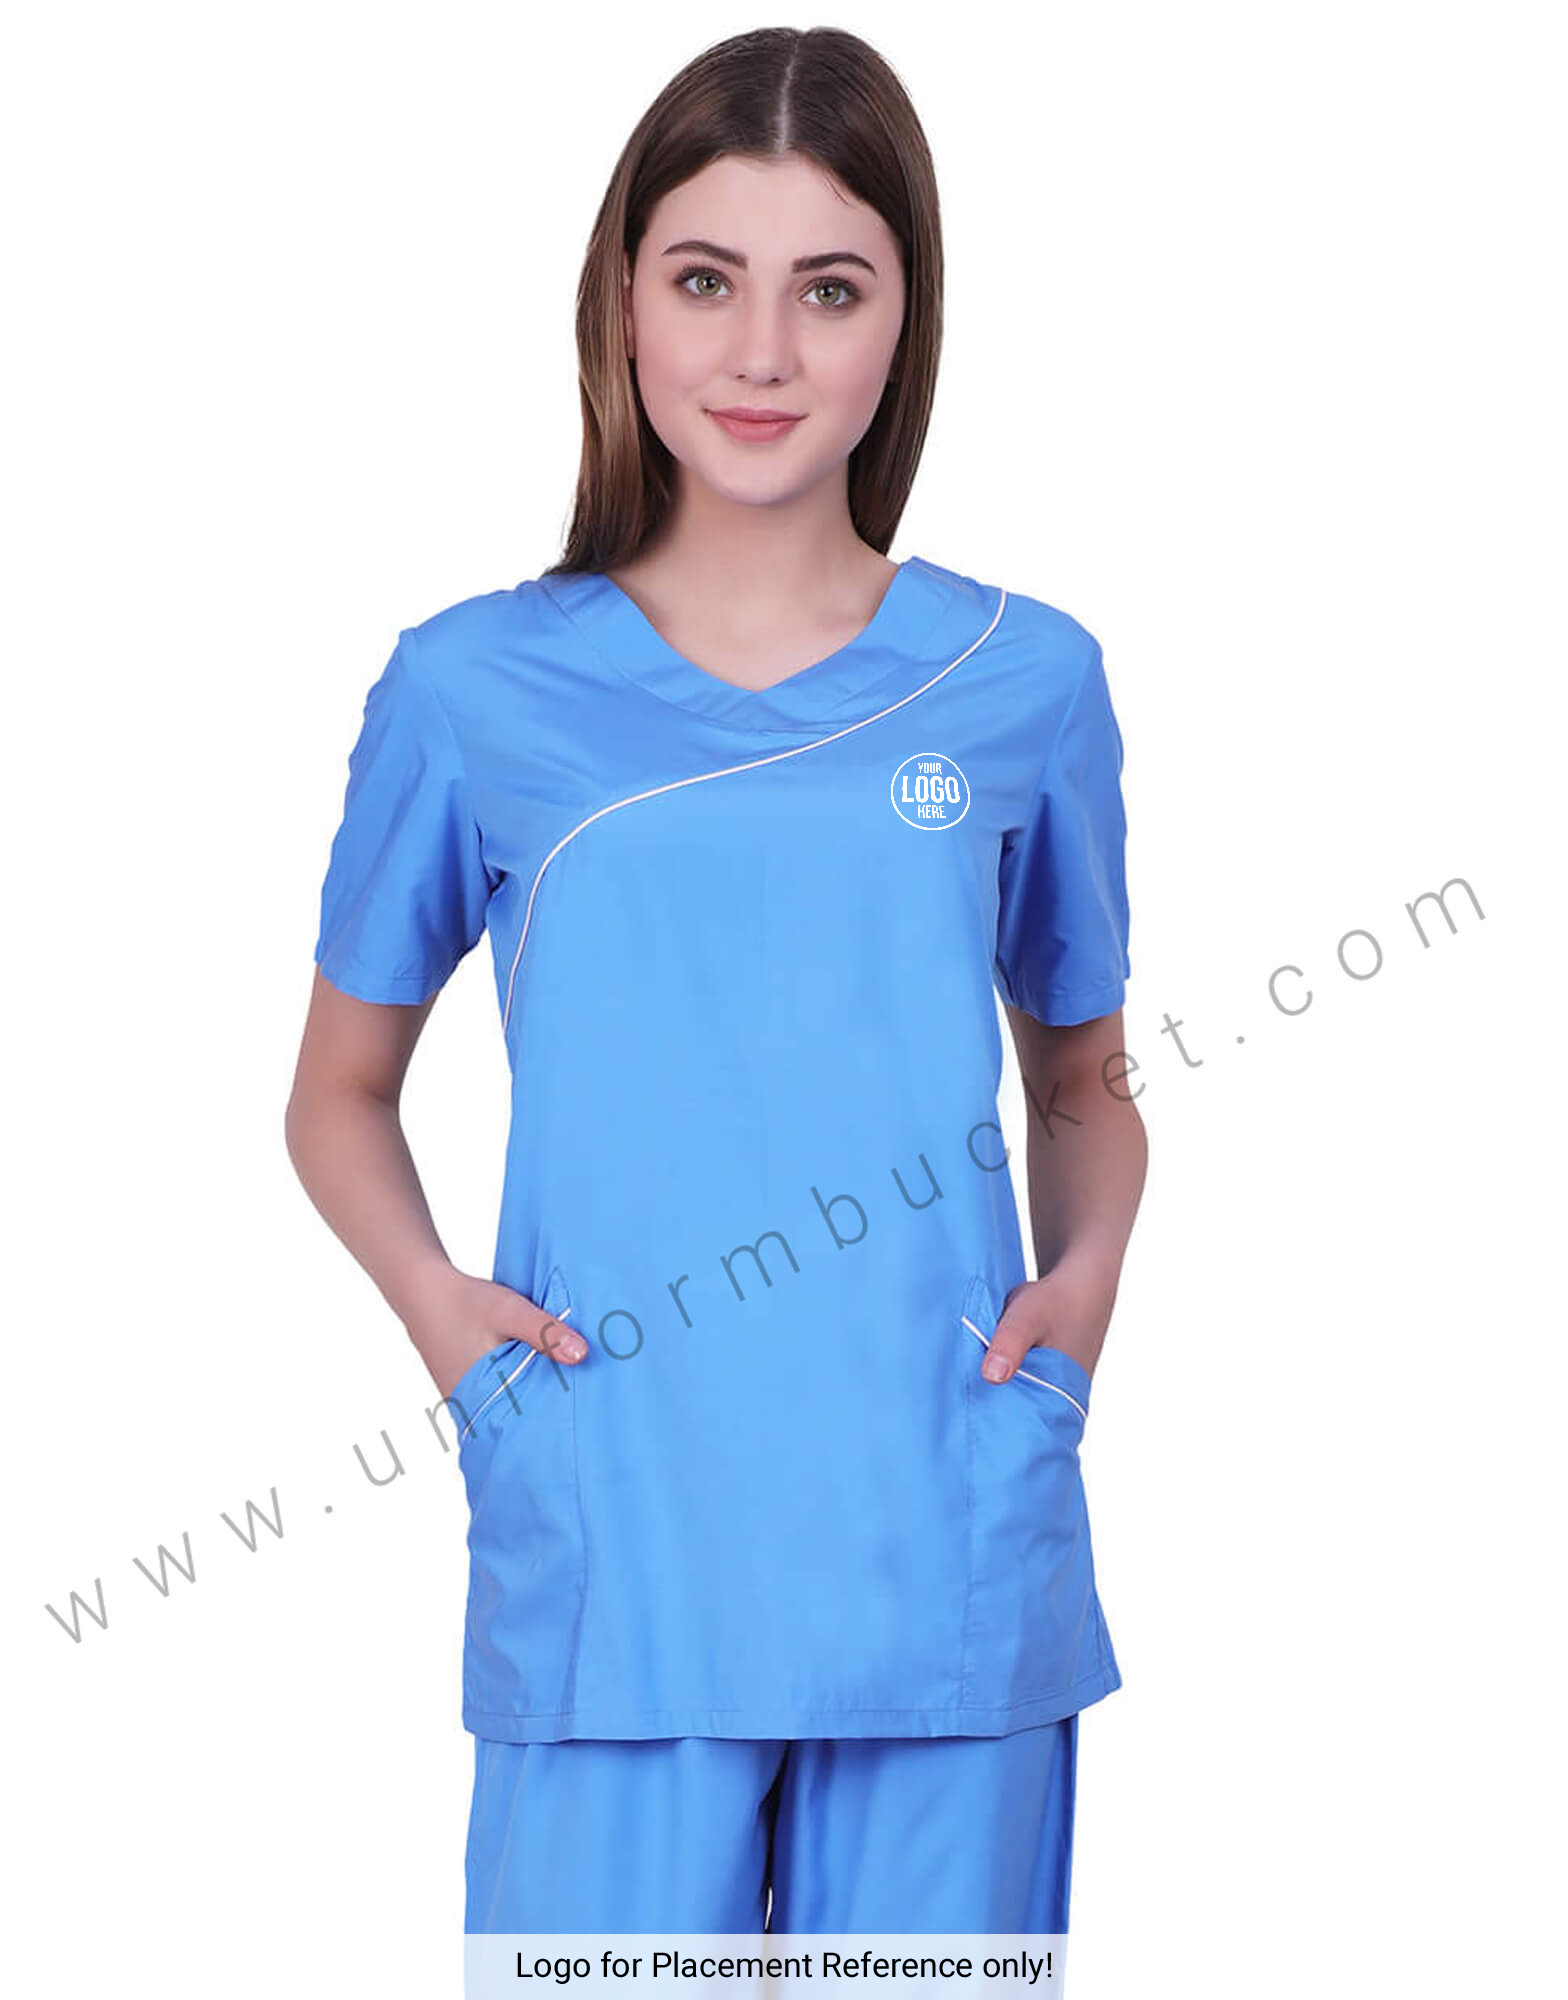 Womens T-Shirt Working Uniform Fashion Short Sleeve V-Neck Nurse Workwear Shirt Blouse Tops with Pocket 